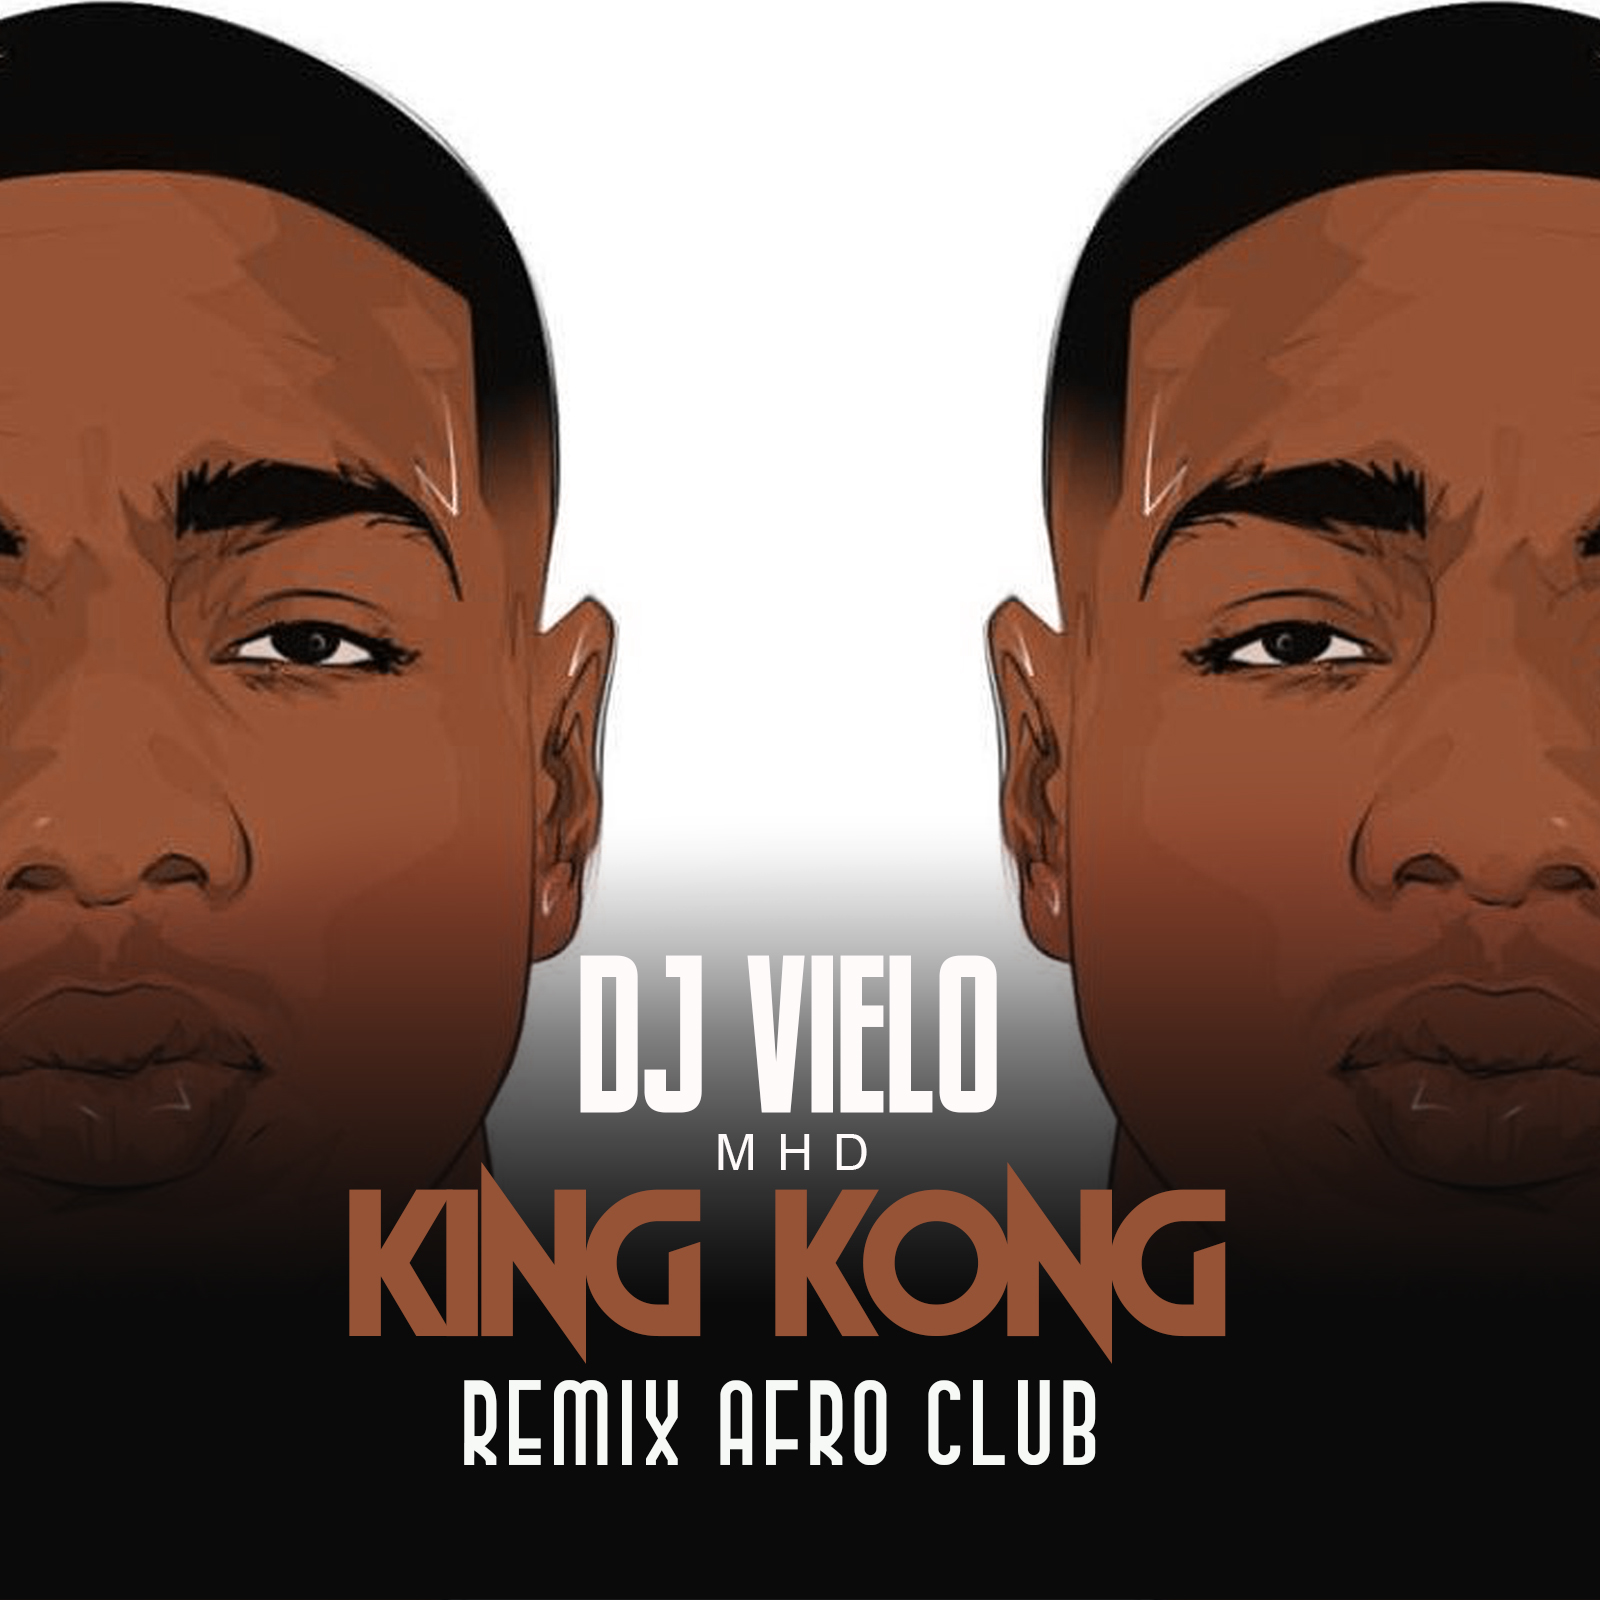 İndirmek Dj Vielo X MHD - AFRO TRAP Part.11 (King Kong) Remix Afro Club DISPO SUR SPOTIFY, DEEZER, ITUNES